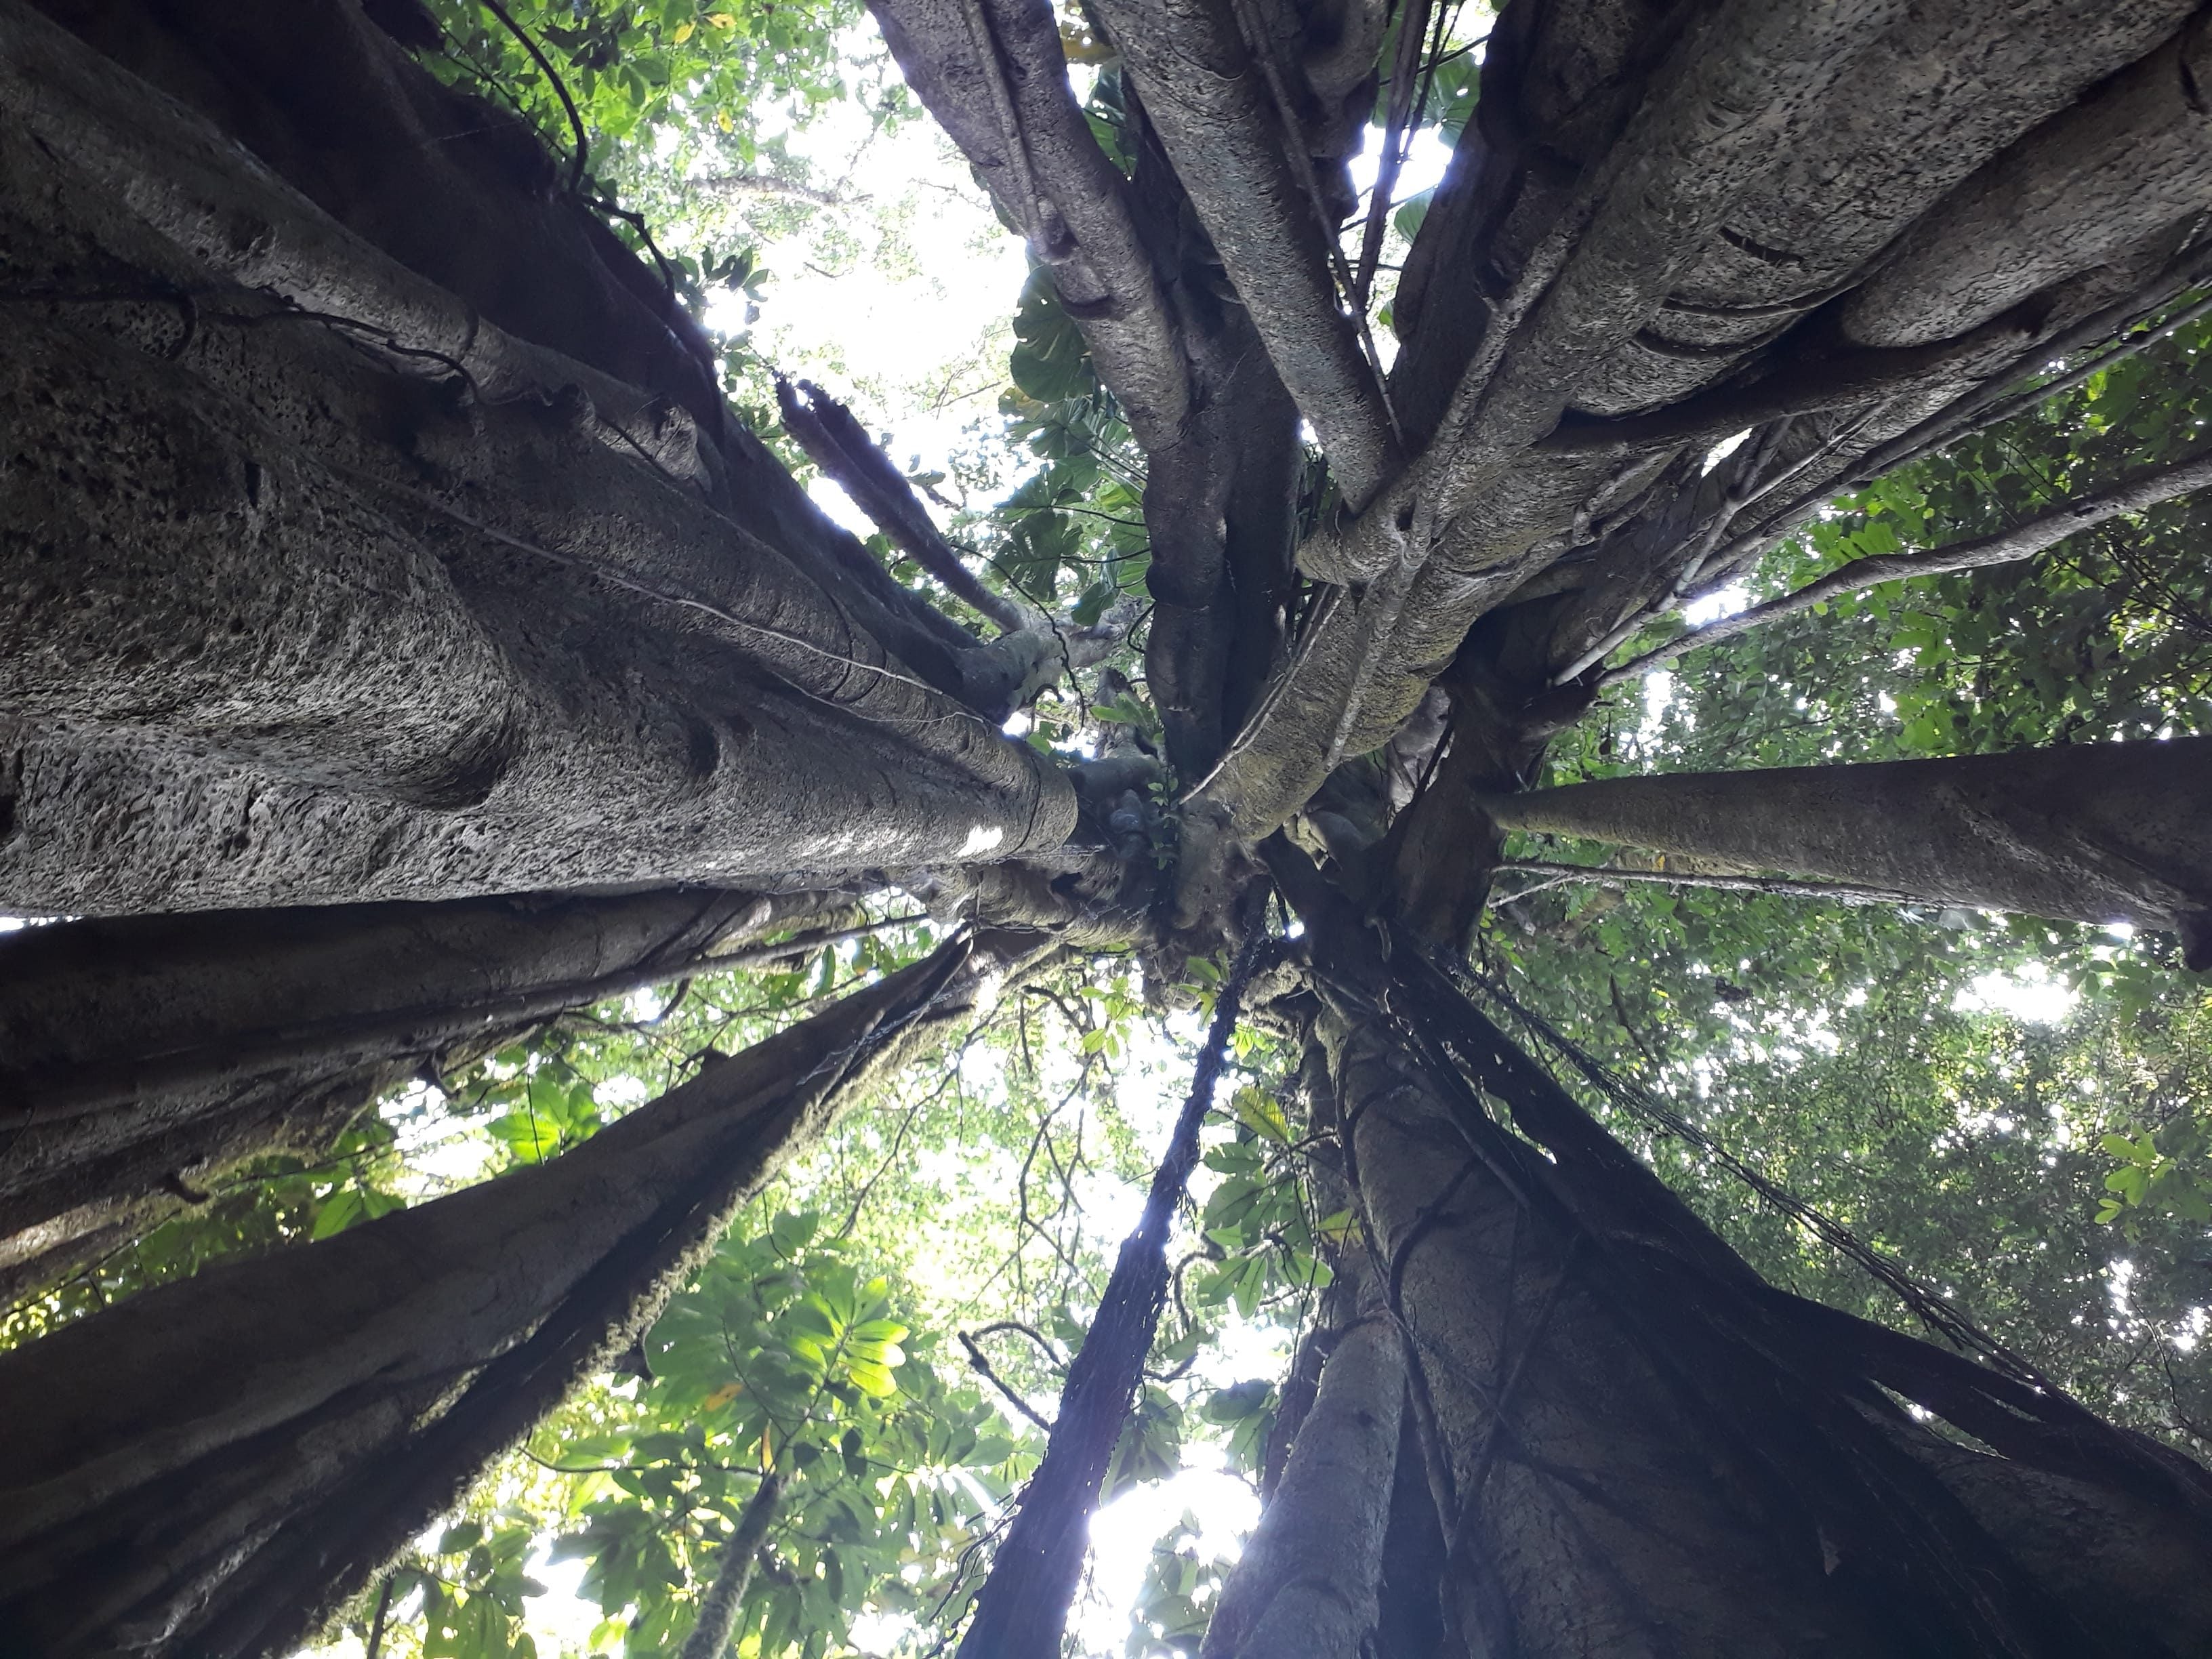 backpacking in Costa Rica jungles